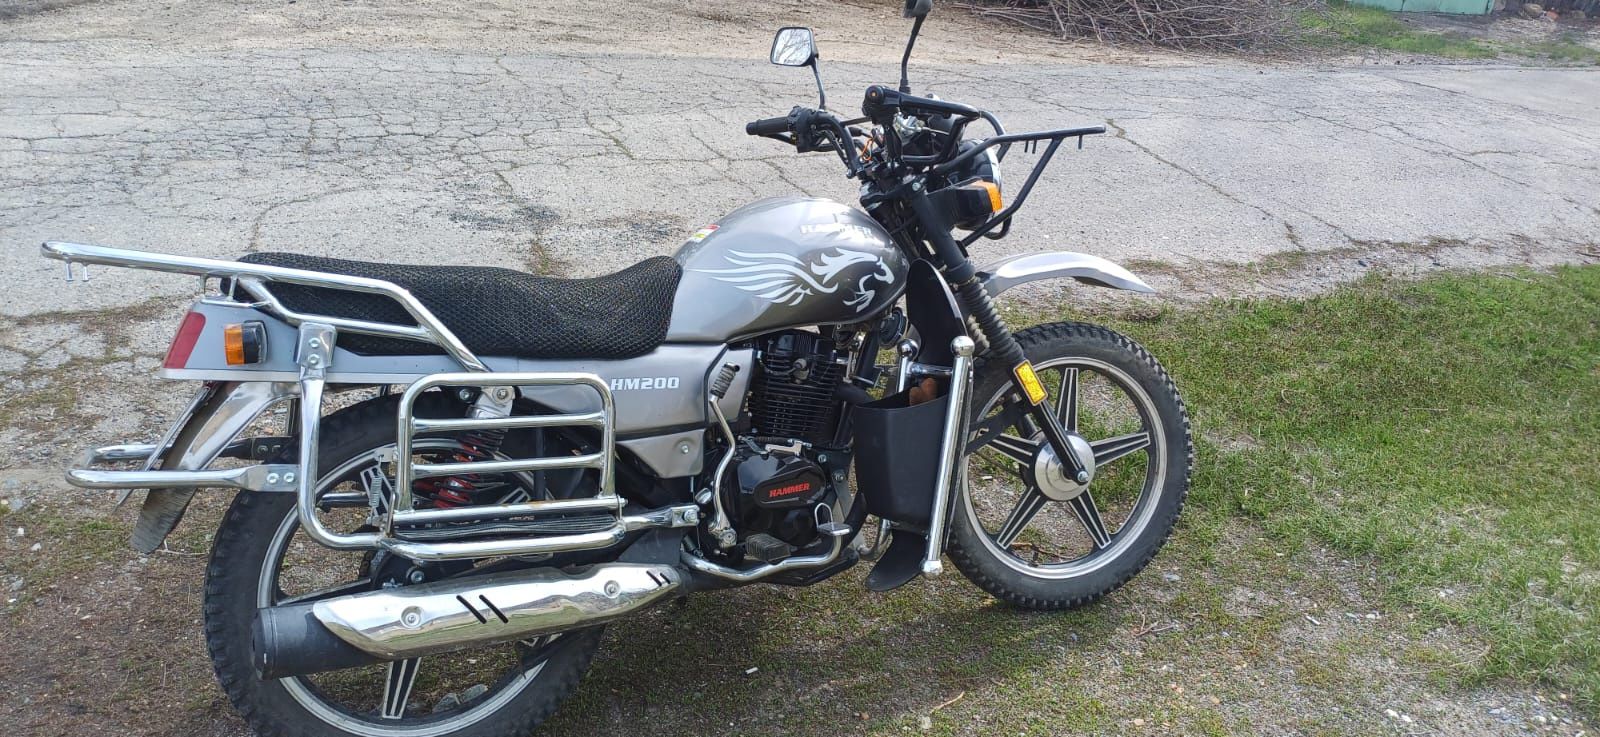 Продам мотоцикл Хамер200